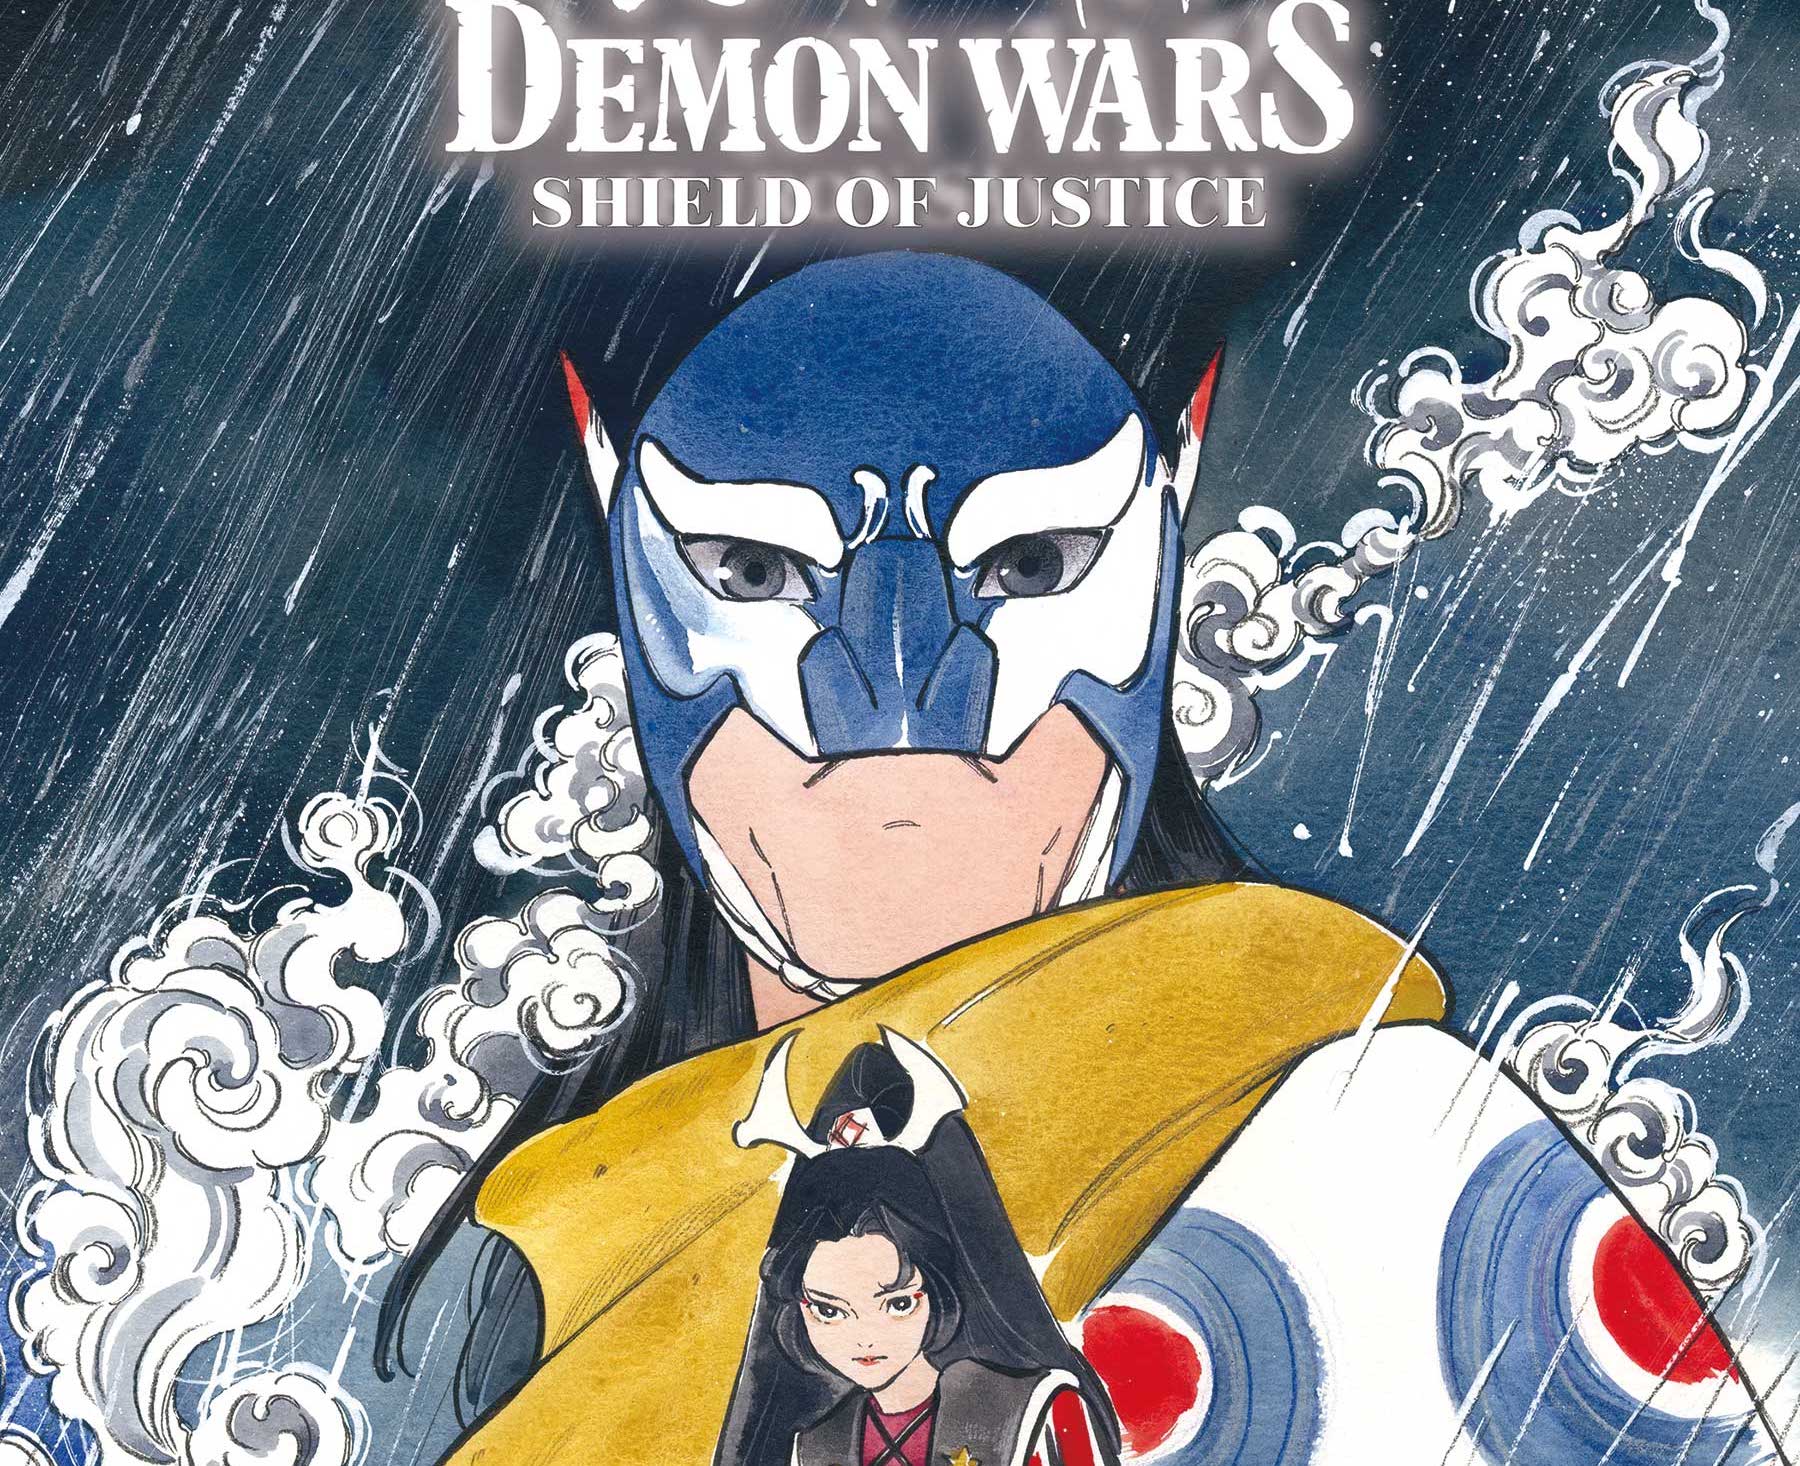 'Demon Wars: Shield of Justice' #1 reveals a civil war is brewing